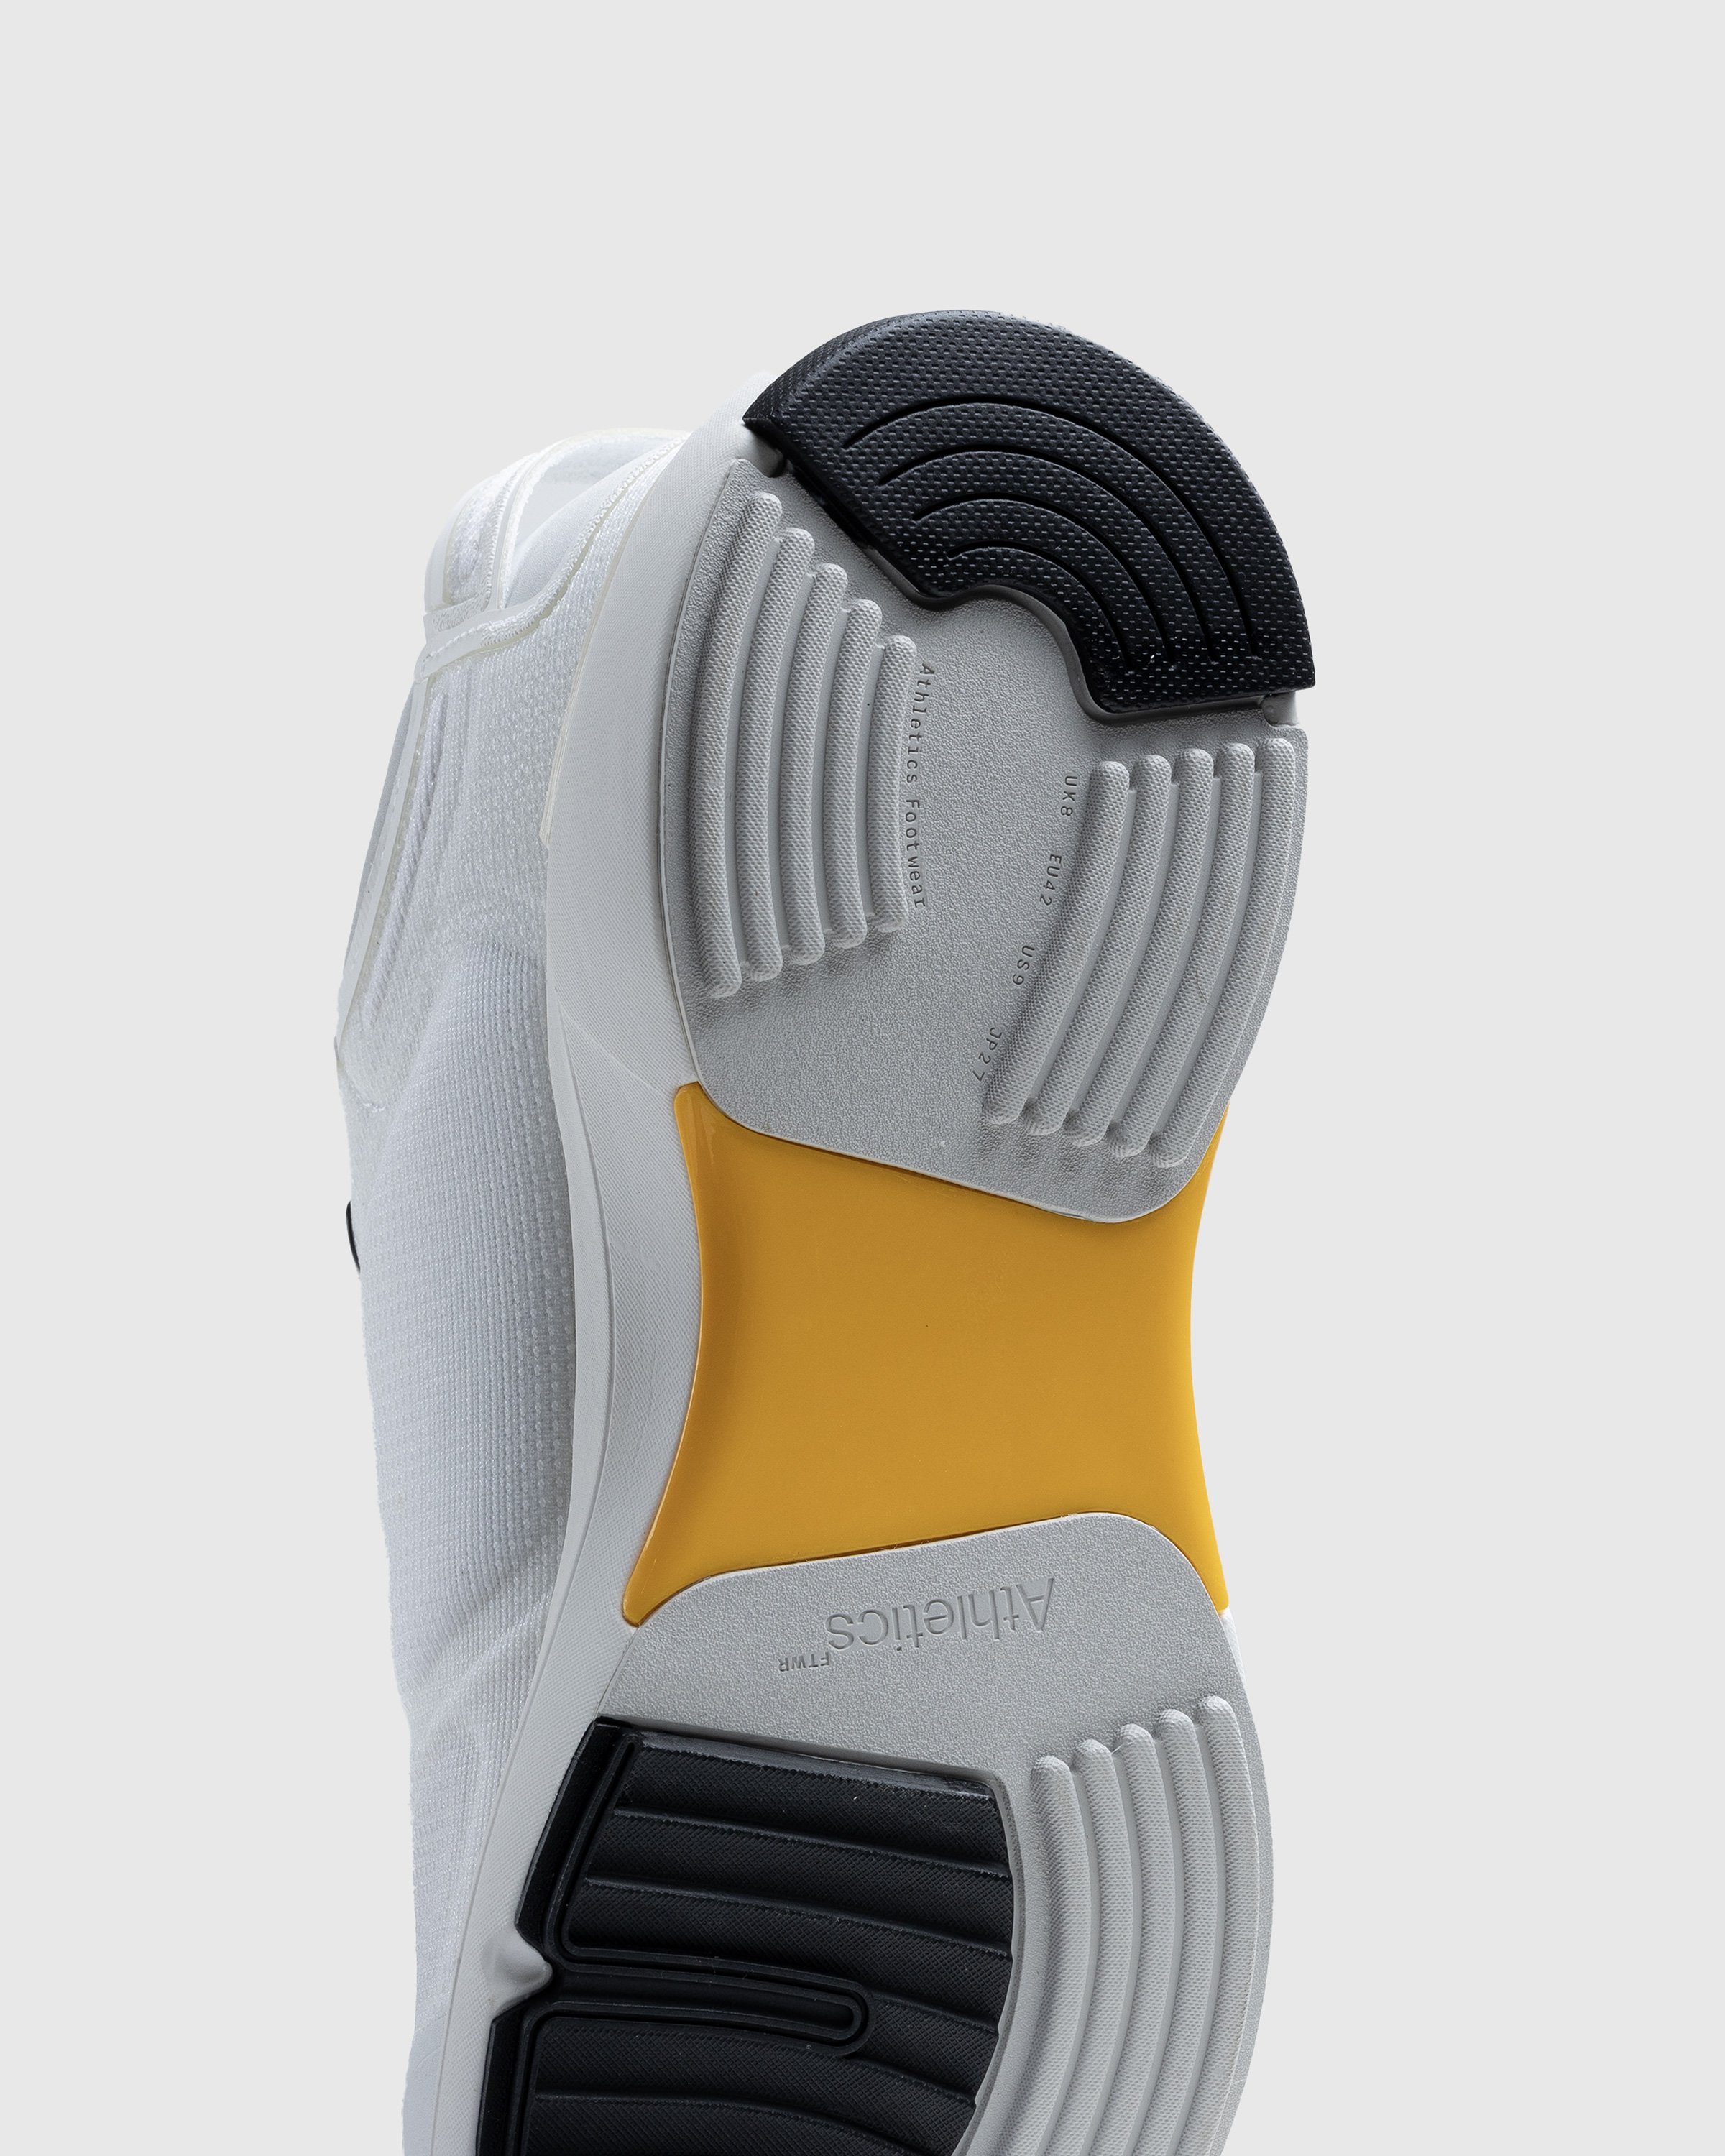 Athletics Footwear - One White - Footwear - White - Image 6